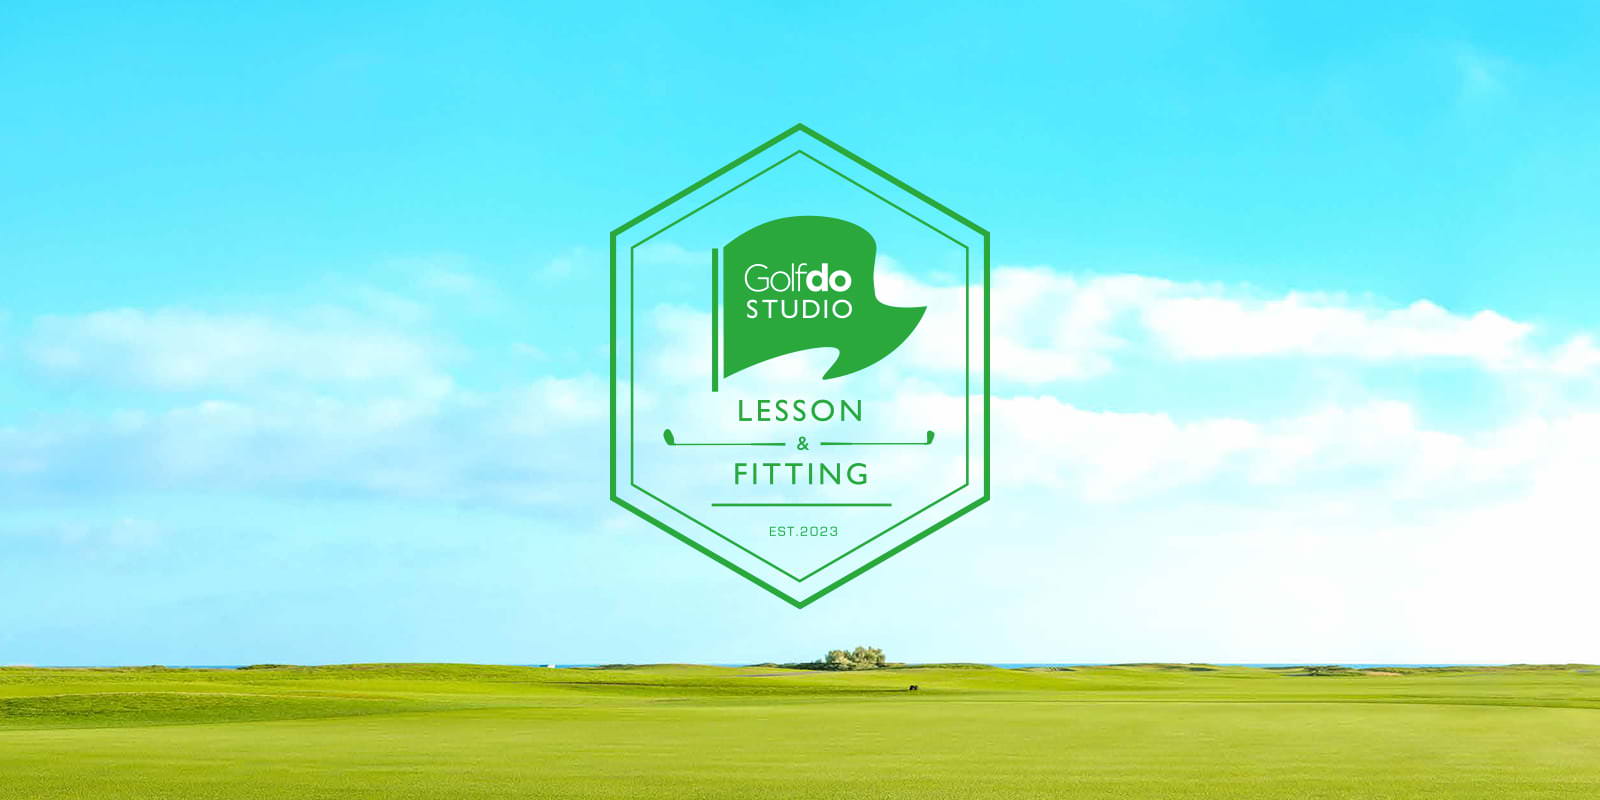 Golfdo STUDIO LSSON & FITTING EST.2023